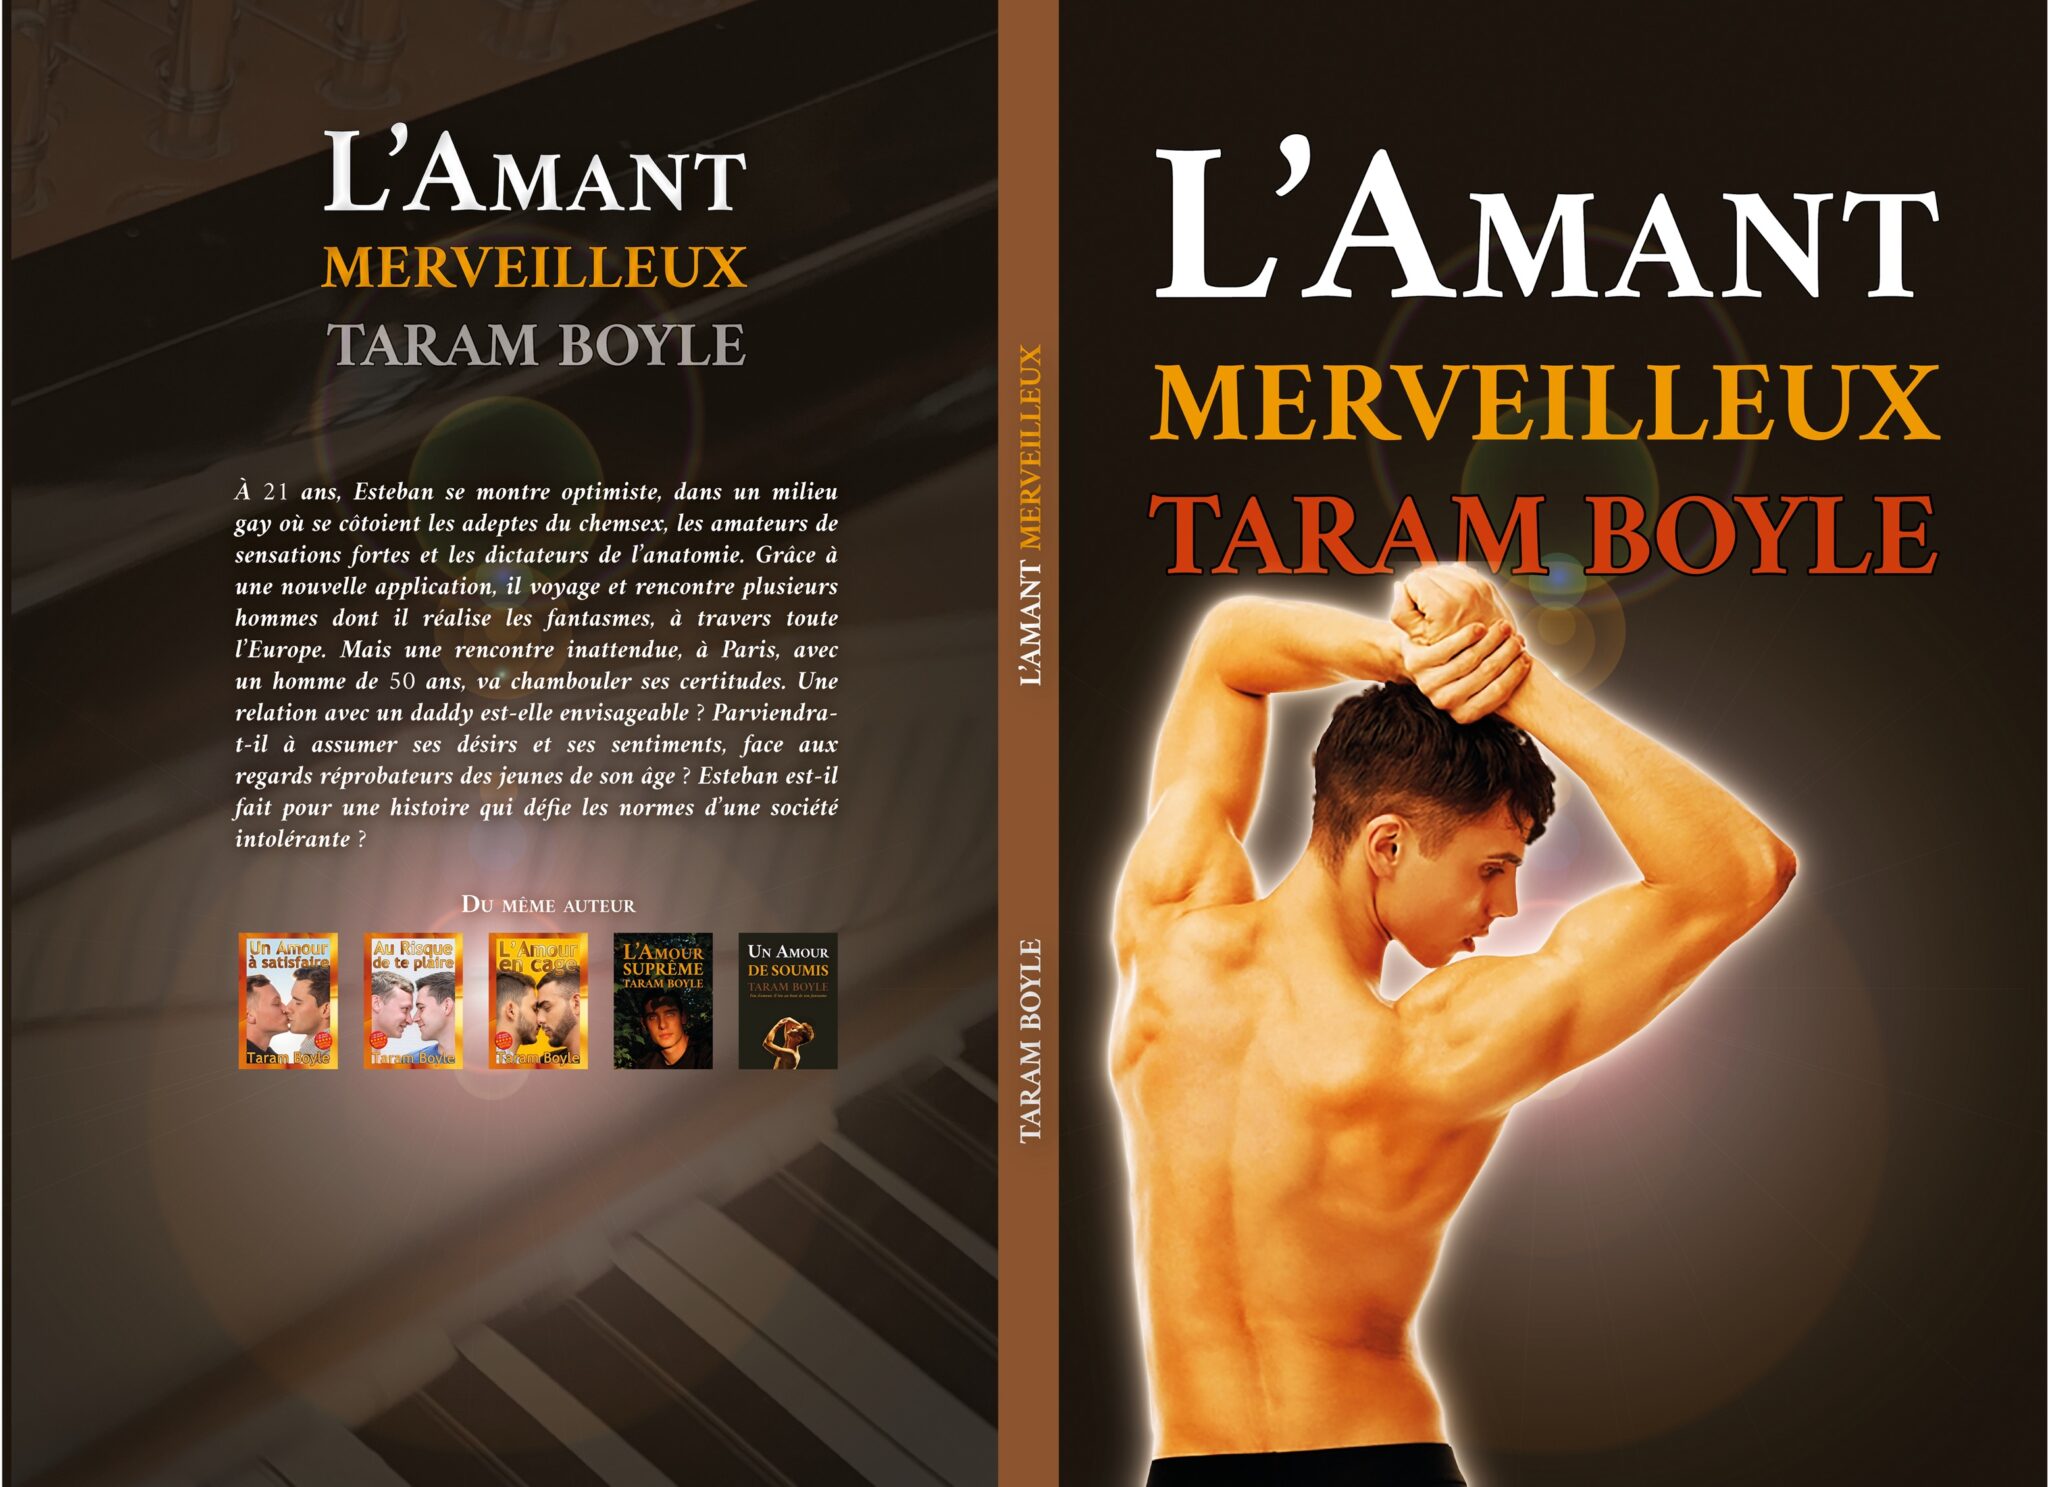 TaramBoyle Cover AmantMerveilleux